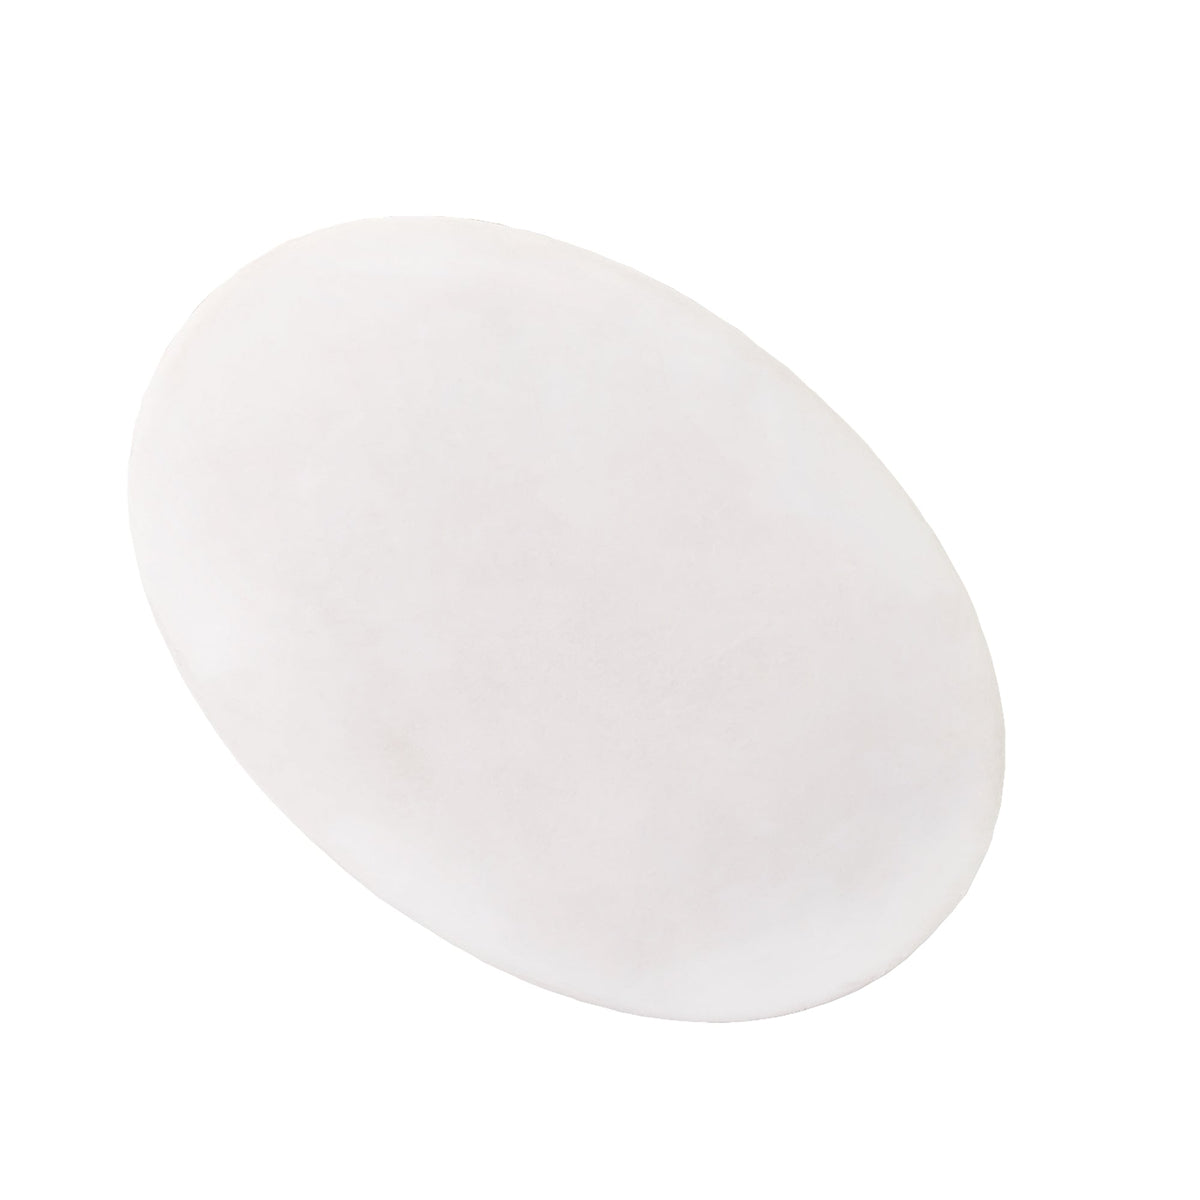 Eraser: Pebble - thin, round plastic - white